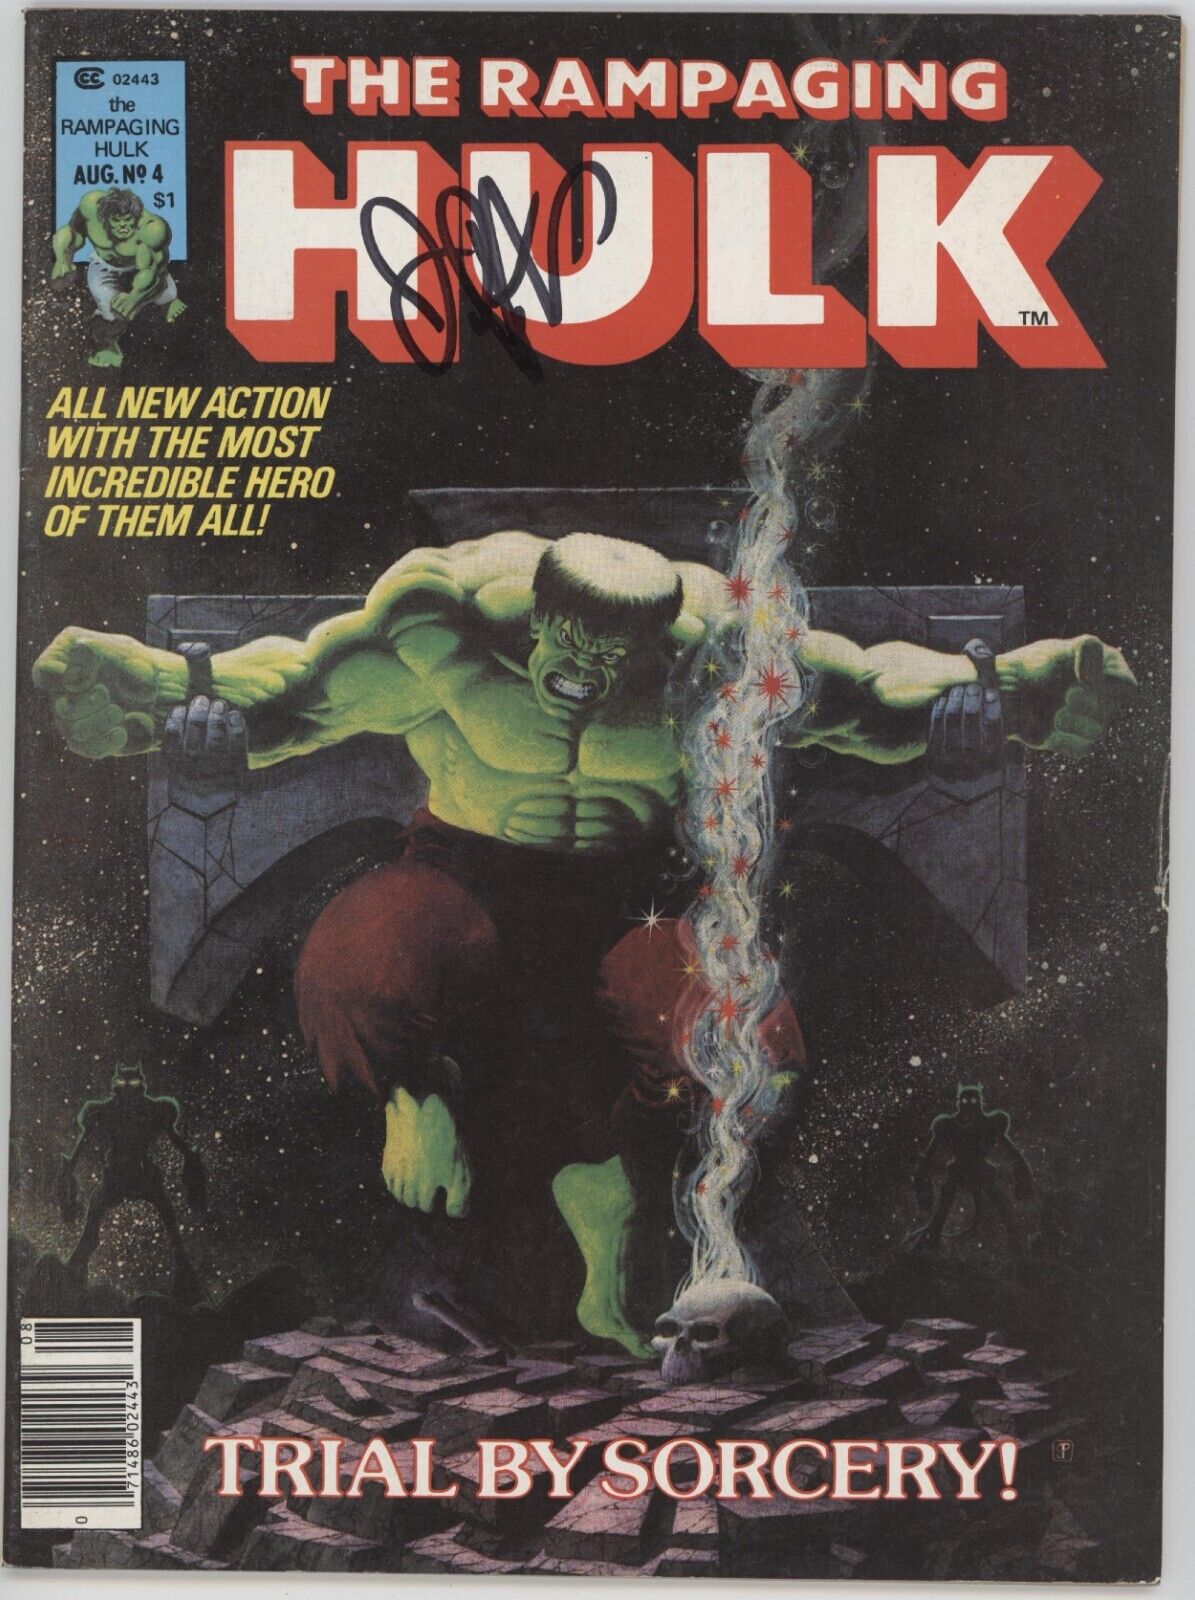 Rampaging Hulk Issue #4 Jim Starlin Personal Copy Auto with COA 1